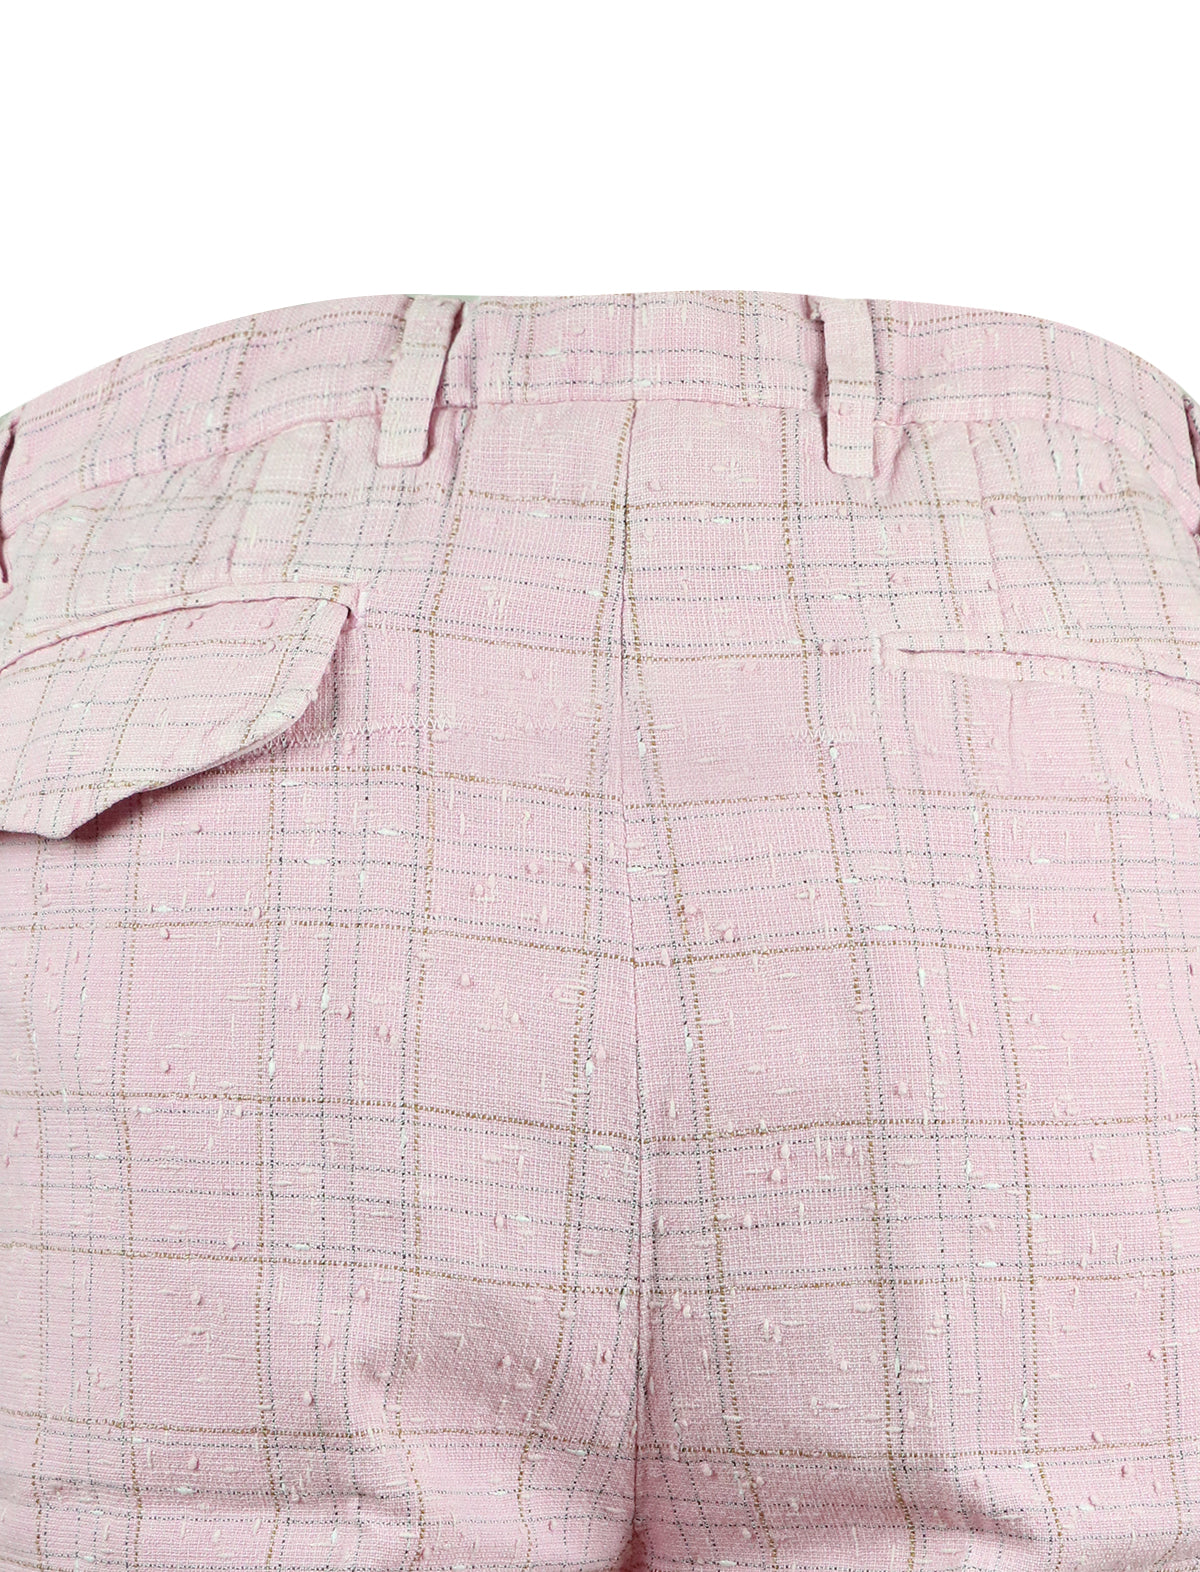 Gabriele Pasini Textured Plaid Trouser in Pink